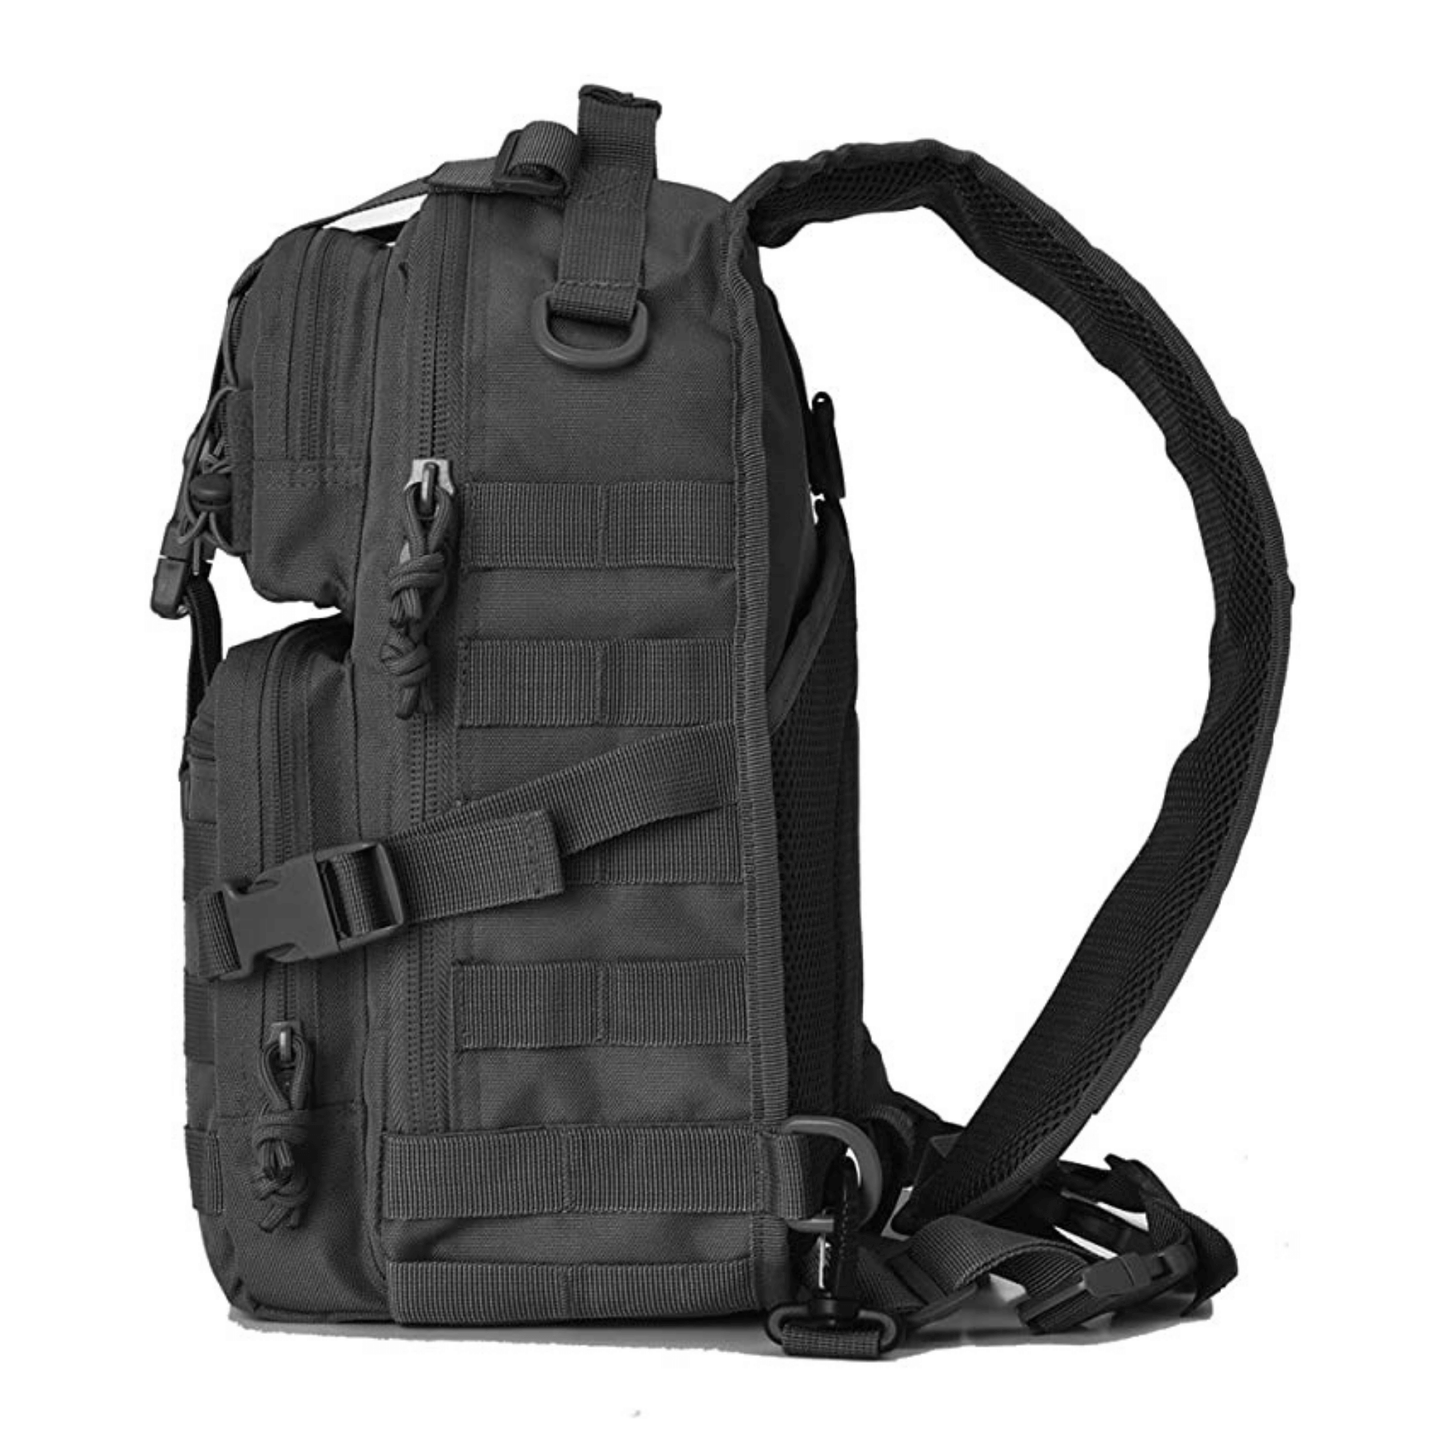 Tactical Military Medium Sling Range Bag by Jupiter Gear